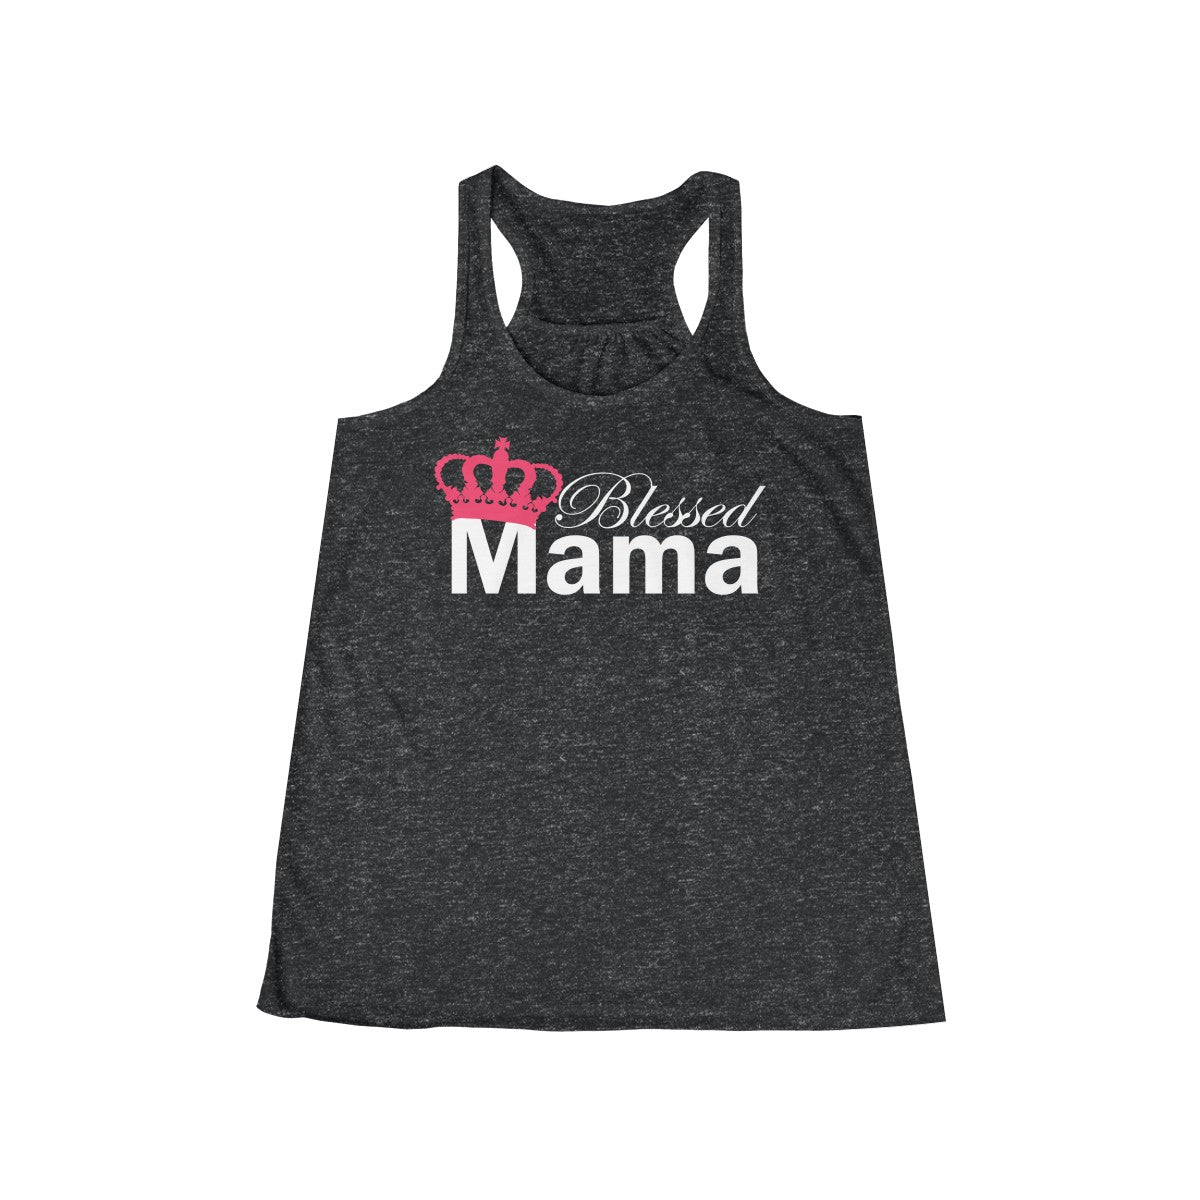 Blessed Mama - Women's Flowy Racerback Tank